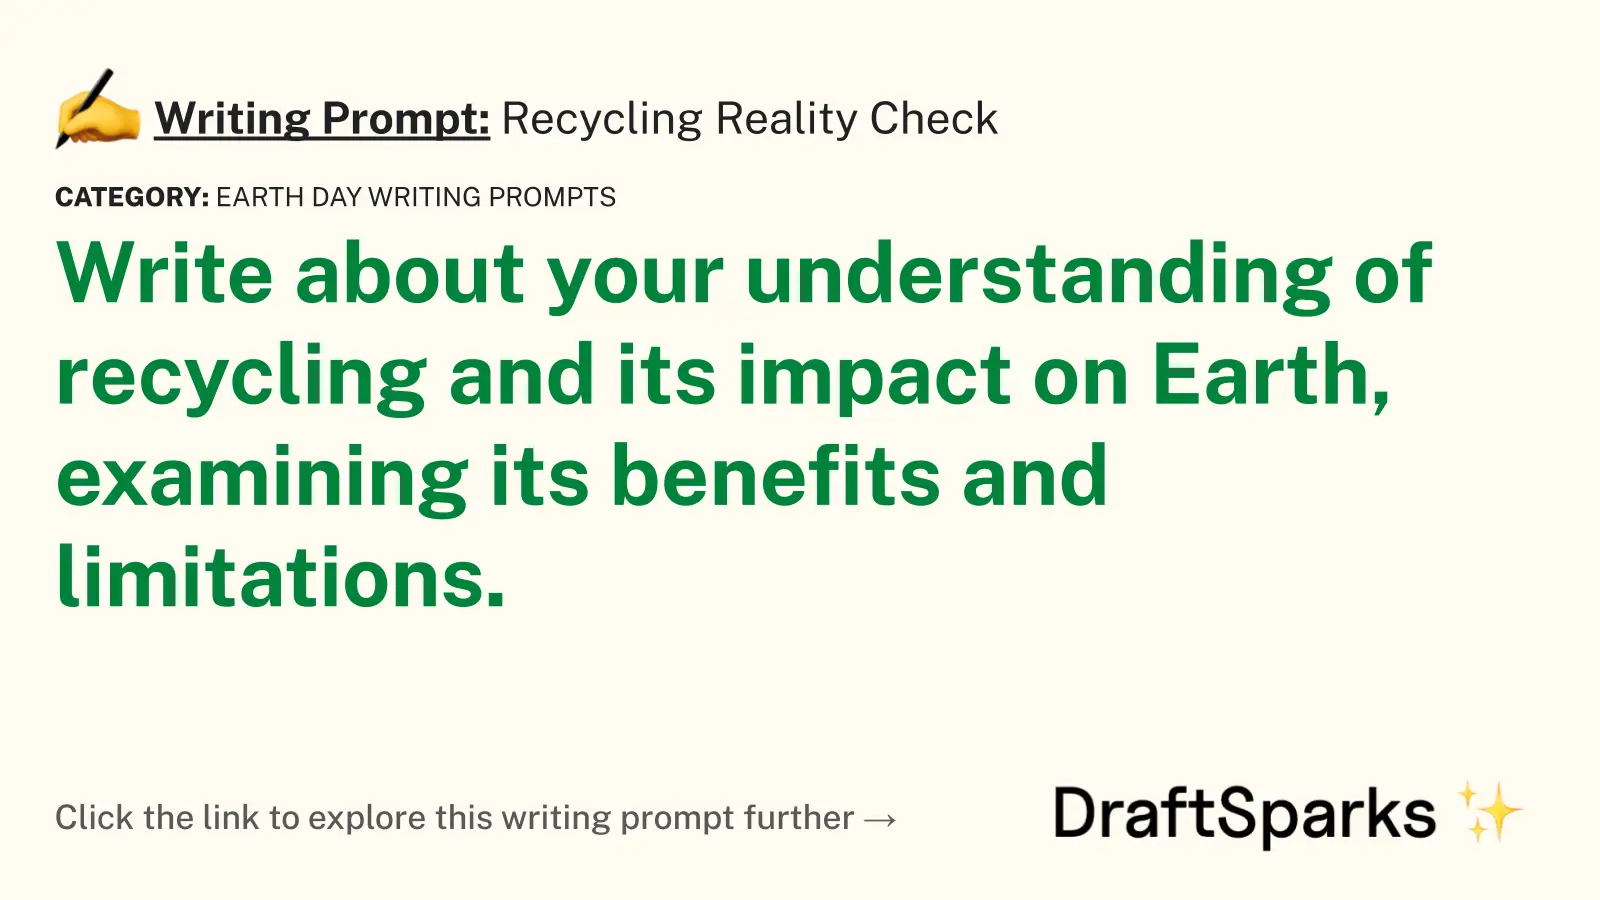 Recycling Reality Check